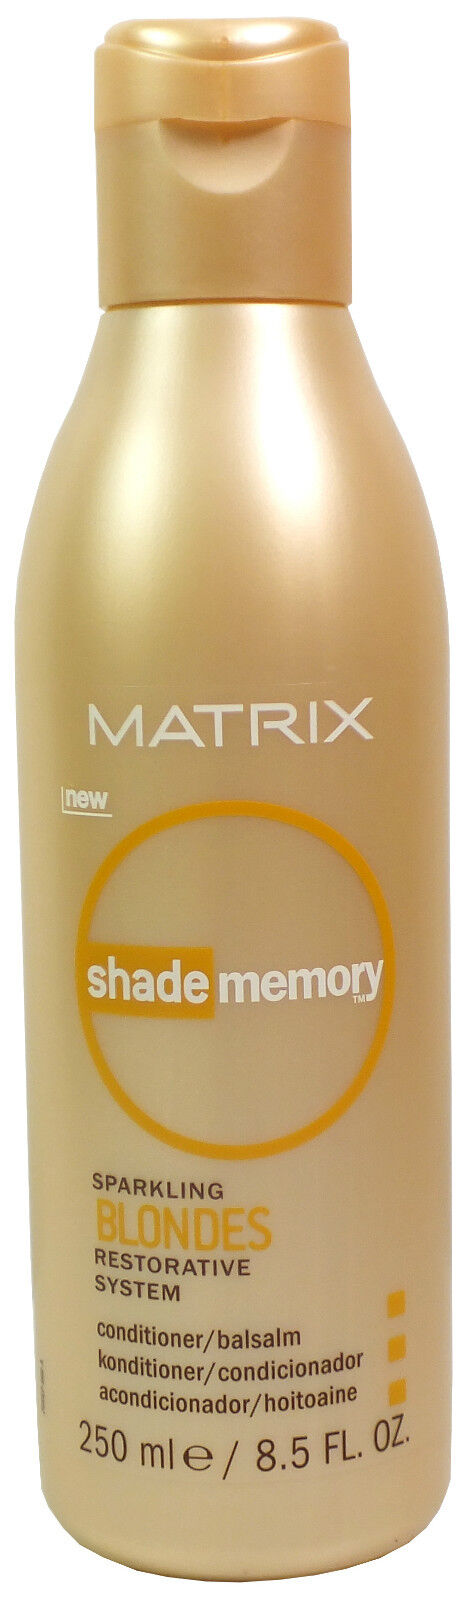 Matrix Shade Memory Sparkling Blondes Restorative System Conditioner 250ml